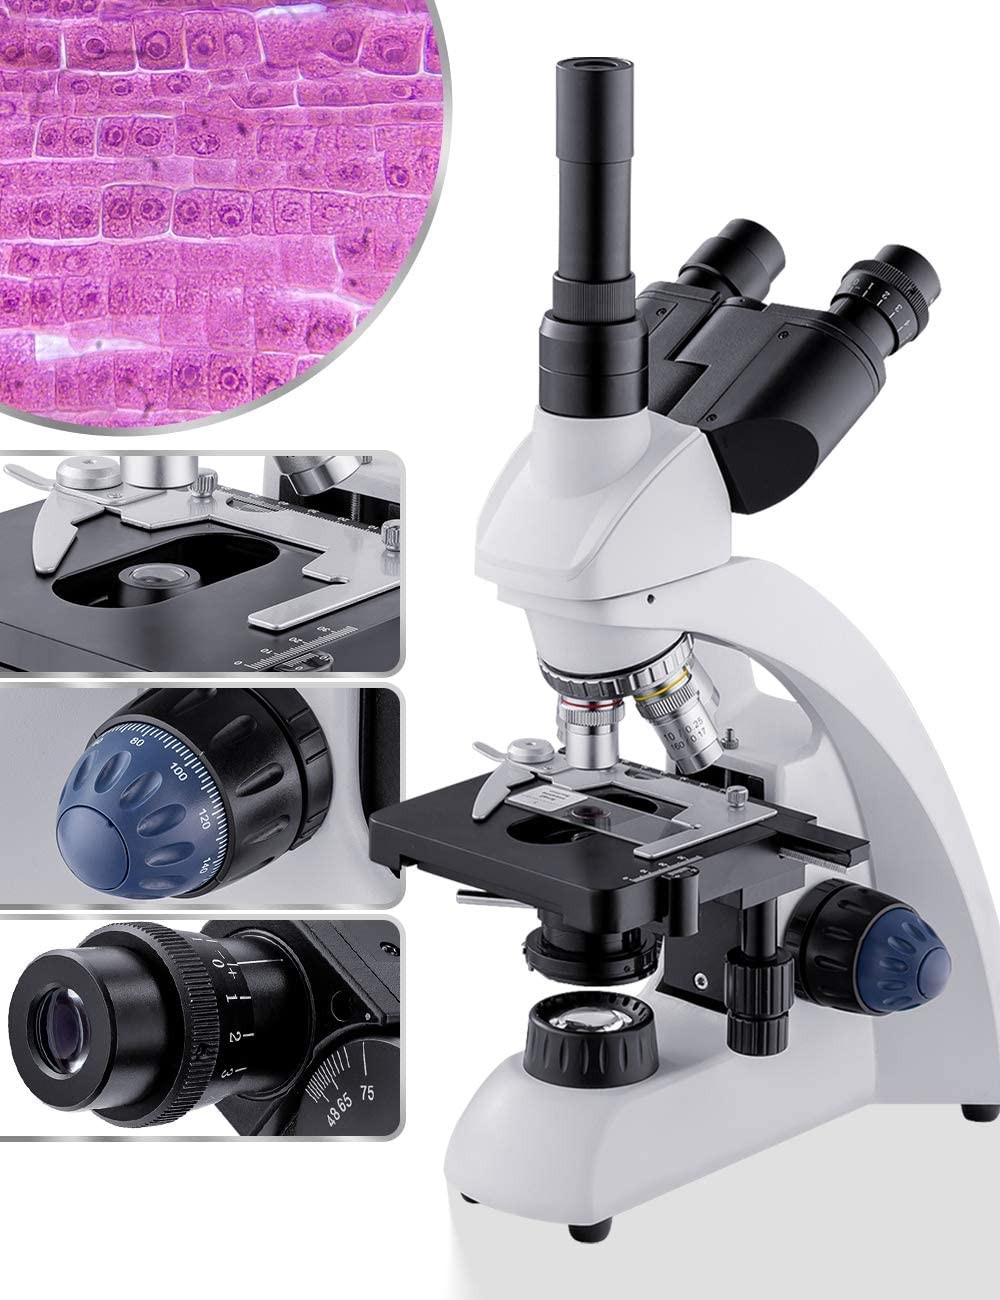 University and Laboratory Trinocular Research Microscope 